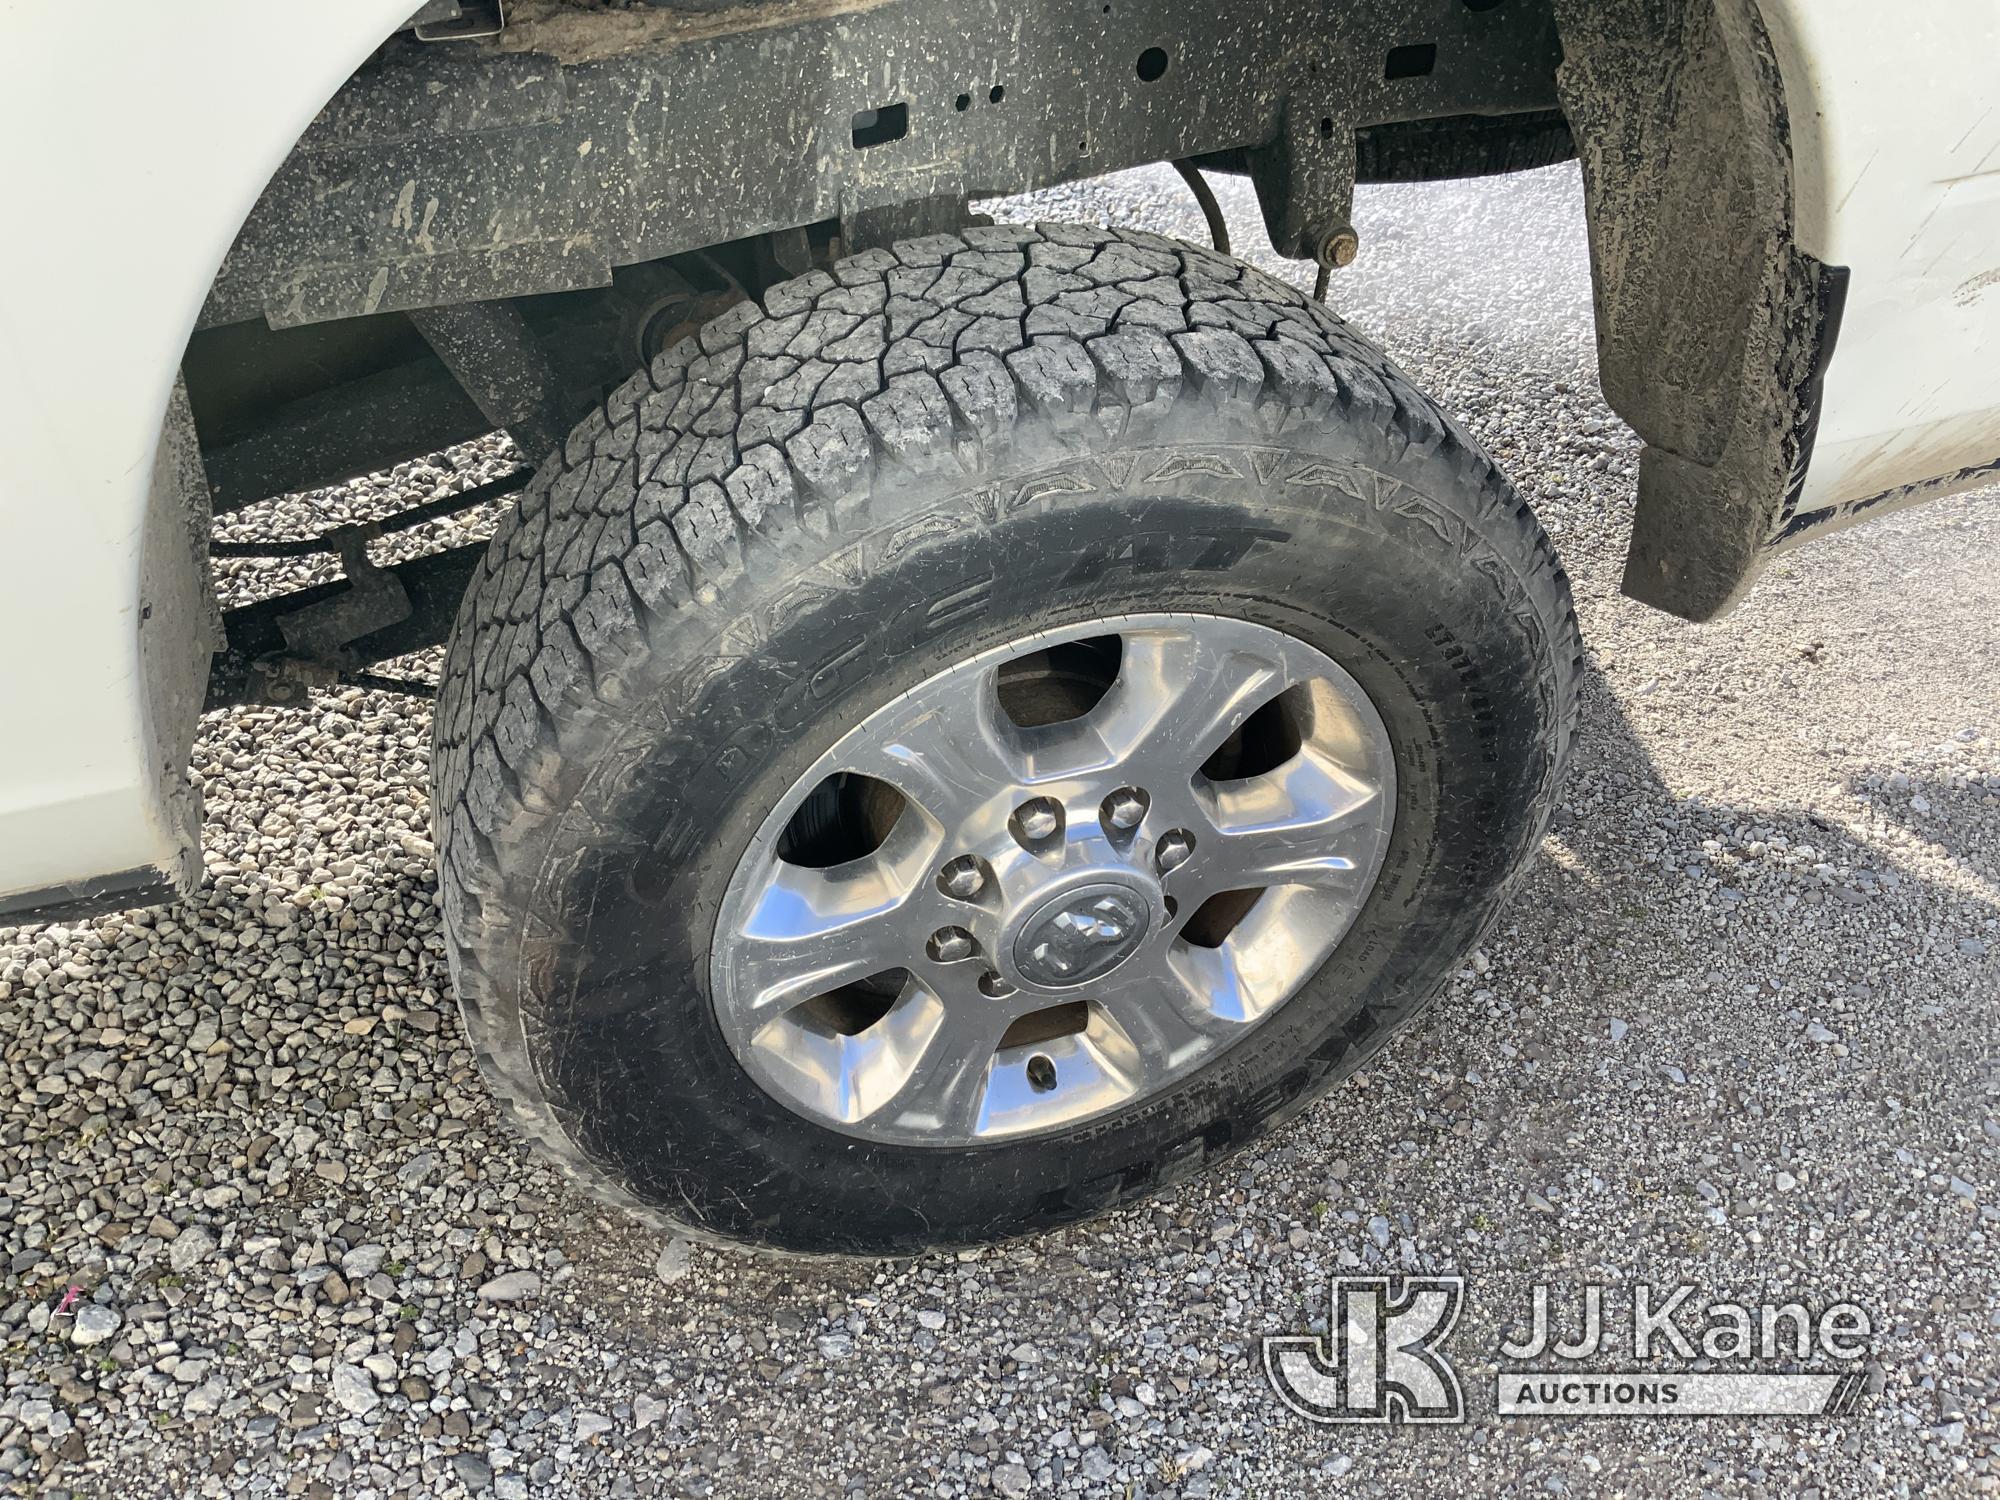 (Fort Wayne, IN) 2019 Dodge Ram W2500 4X4 Crew-Cab Pickup Truck Runs & Moves